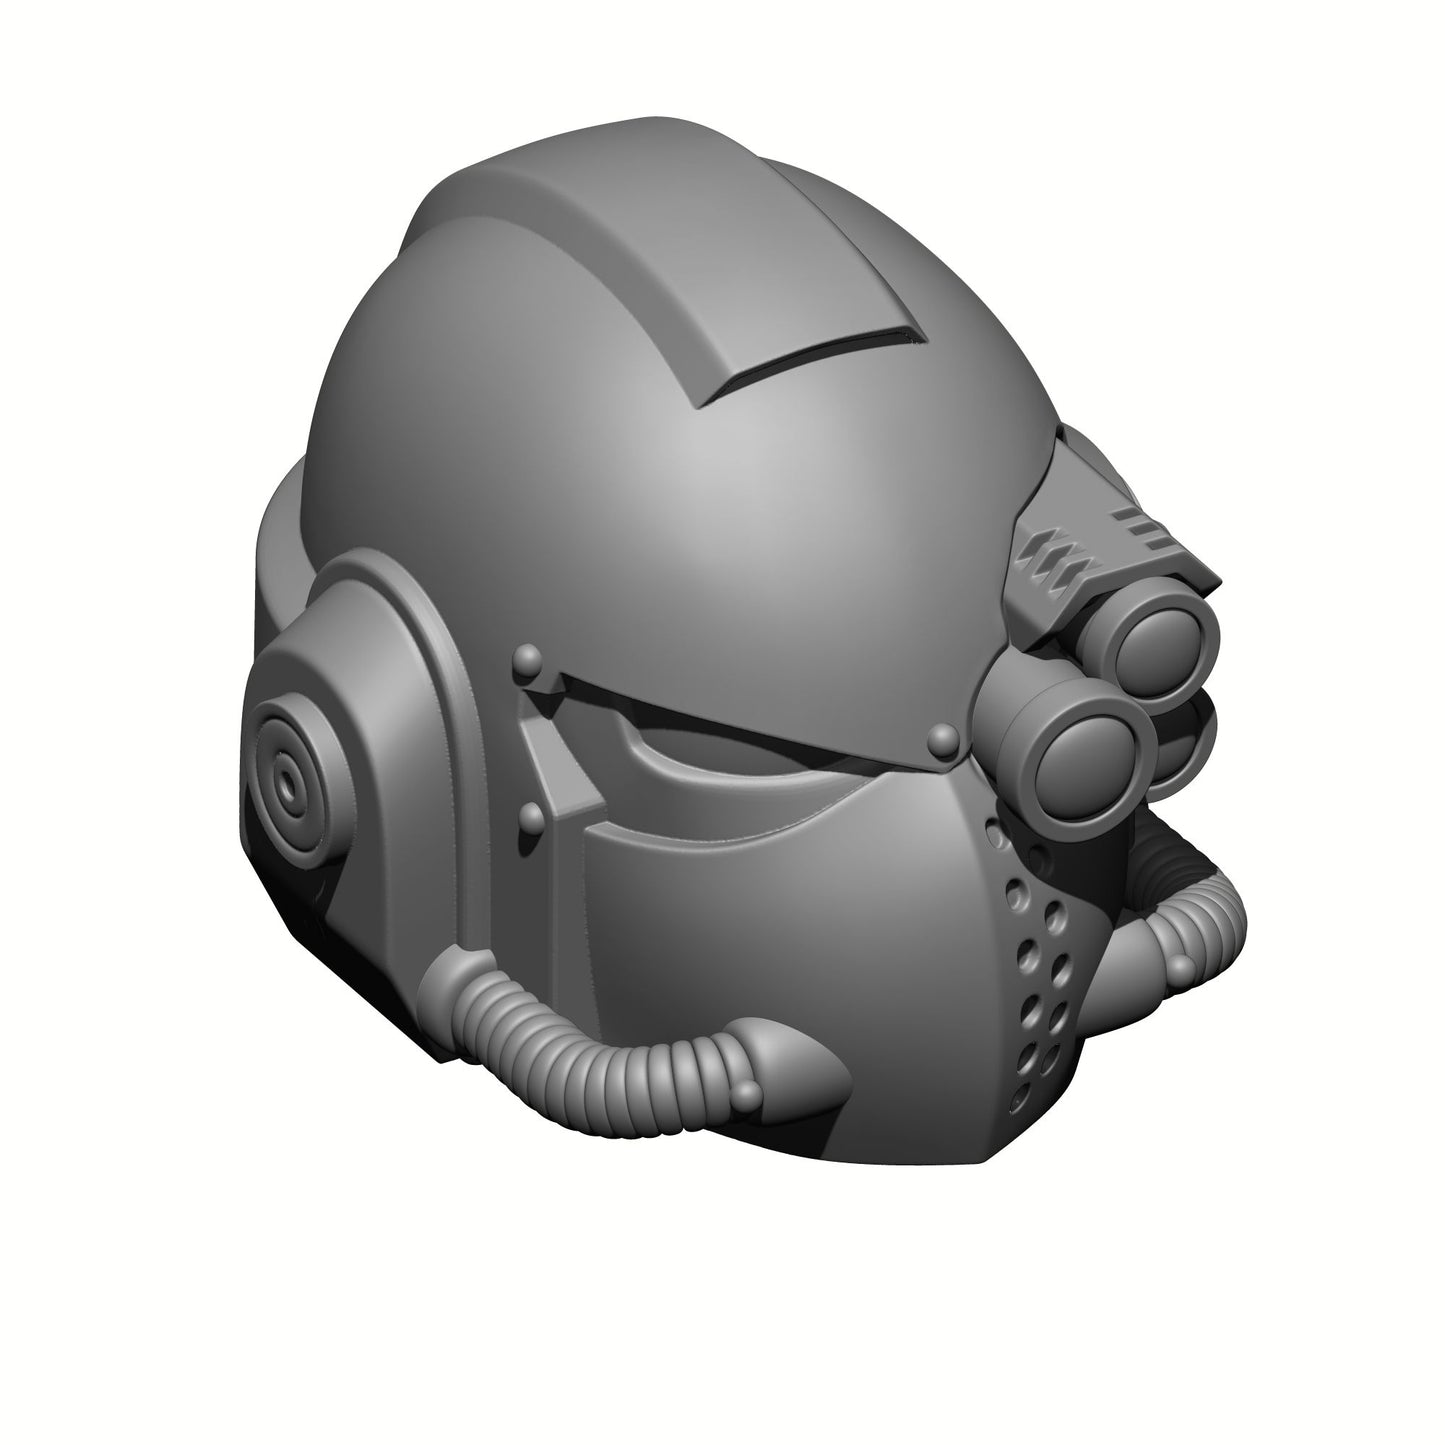 Mechanicus Knight Helmet with Optics: Head Swaps Warhammer 40K JoyToy Compatible Space Marine 1:18 Action Figure 4" Custom Parts